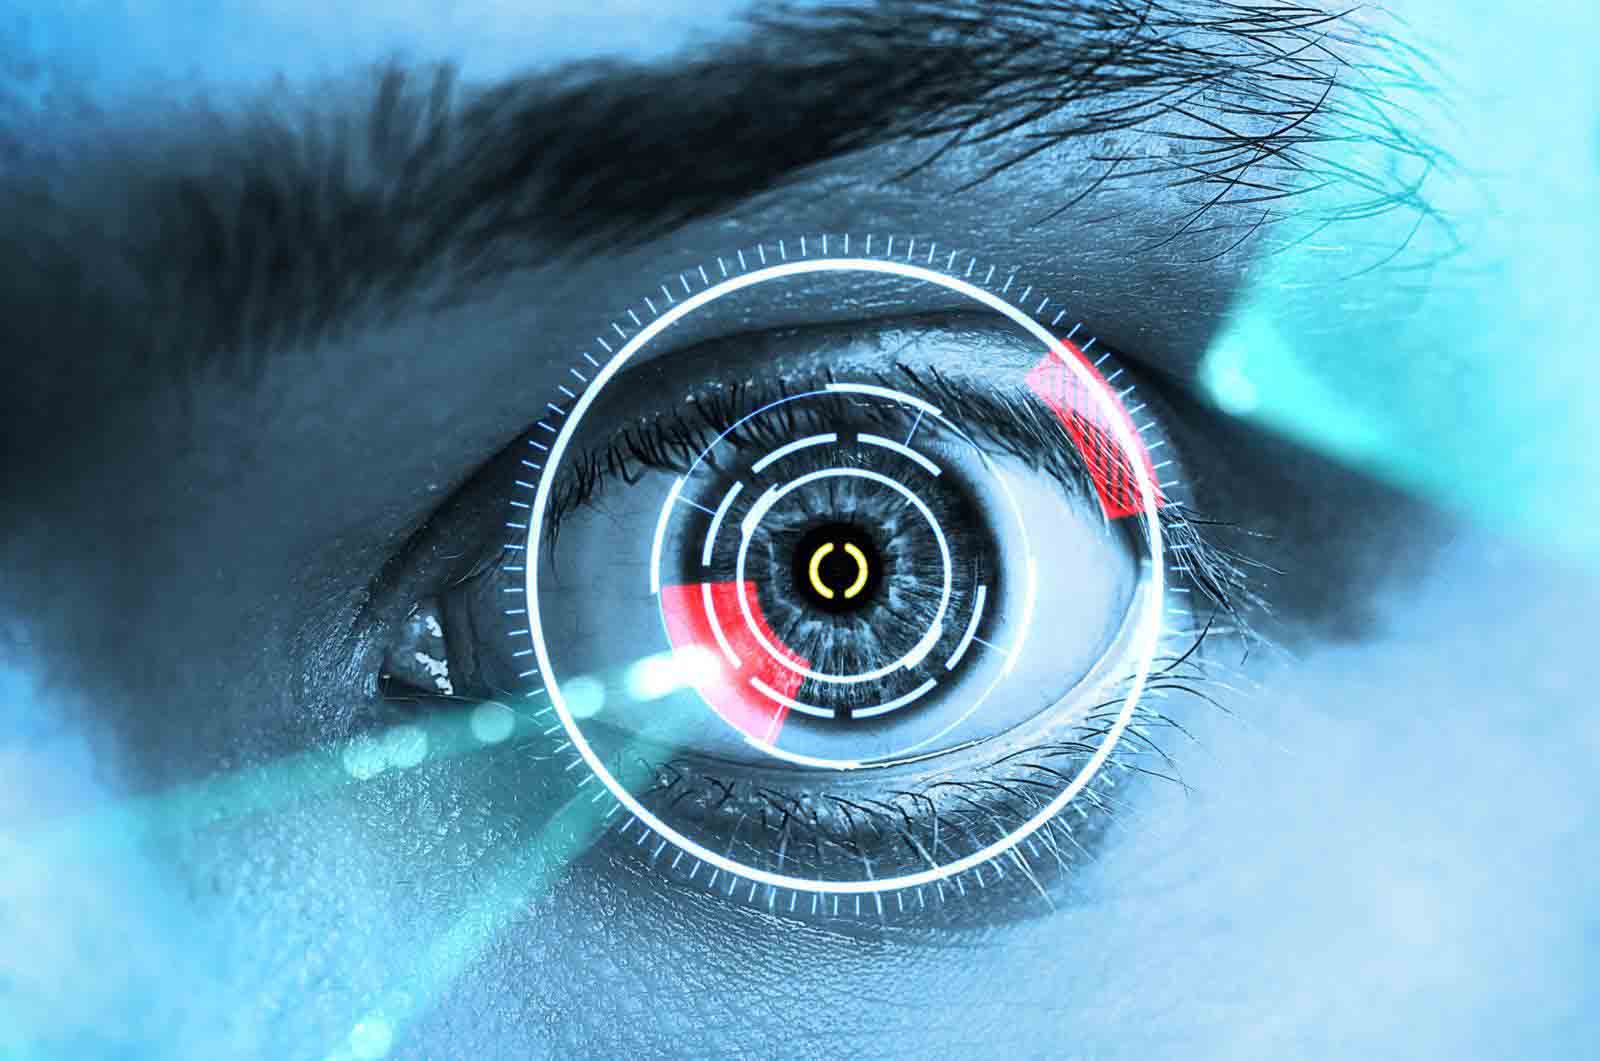 Biometrics Security System using the Smart Eye System